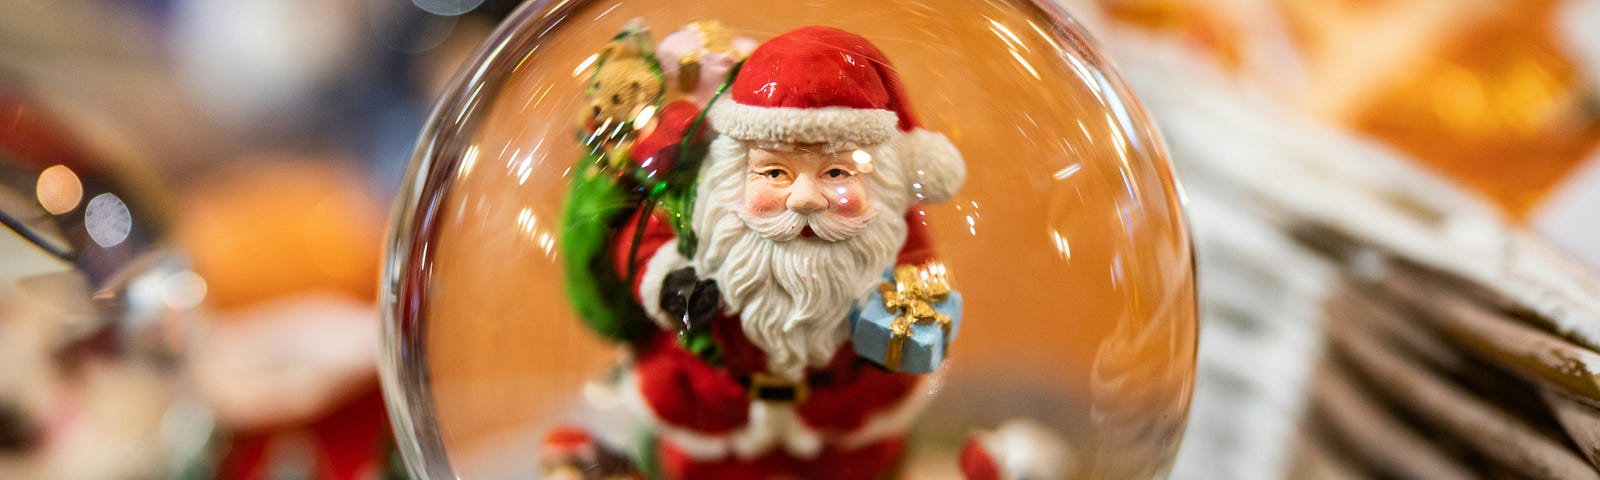 Porcelain Santa inside a snow globe.